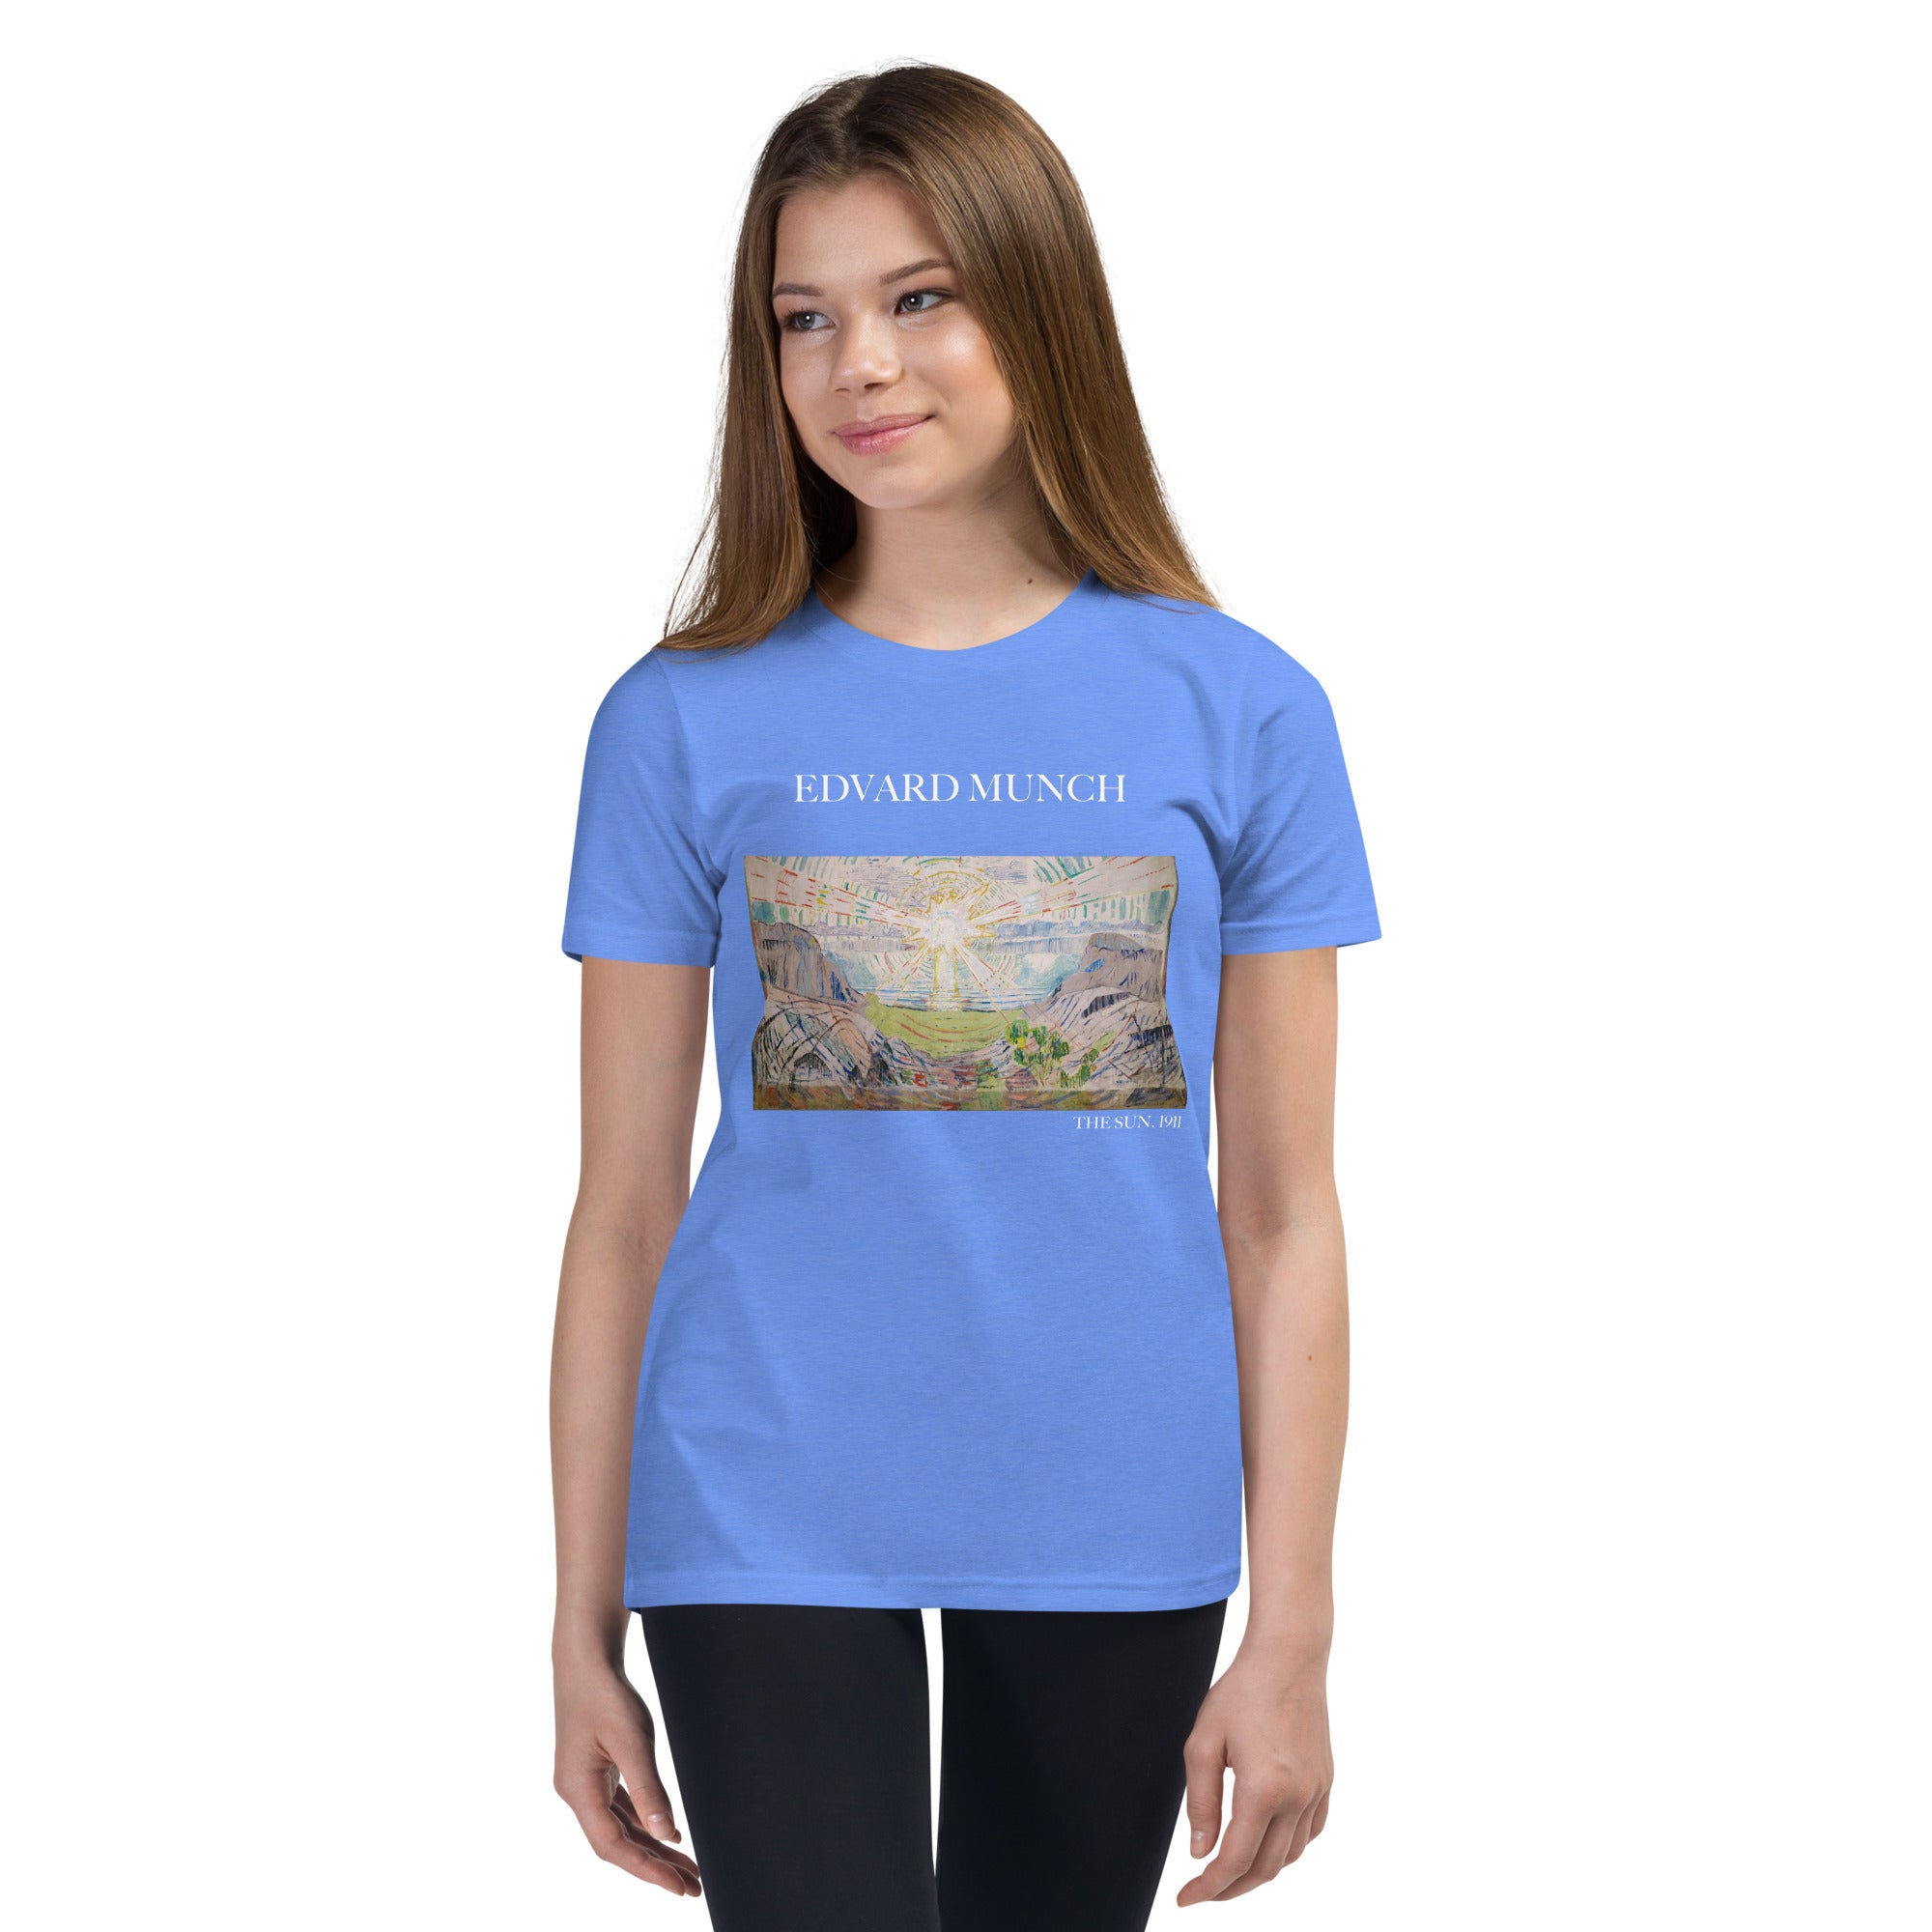 Edvard Munch 'The Sun' Famous Painting Short Sleeve T-Shirt | Premium Youth Art Tee